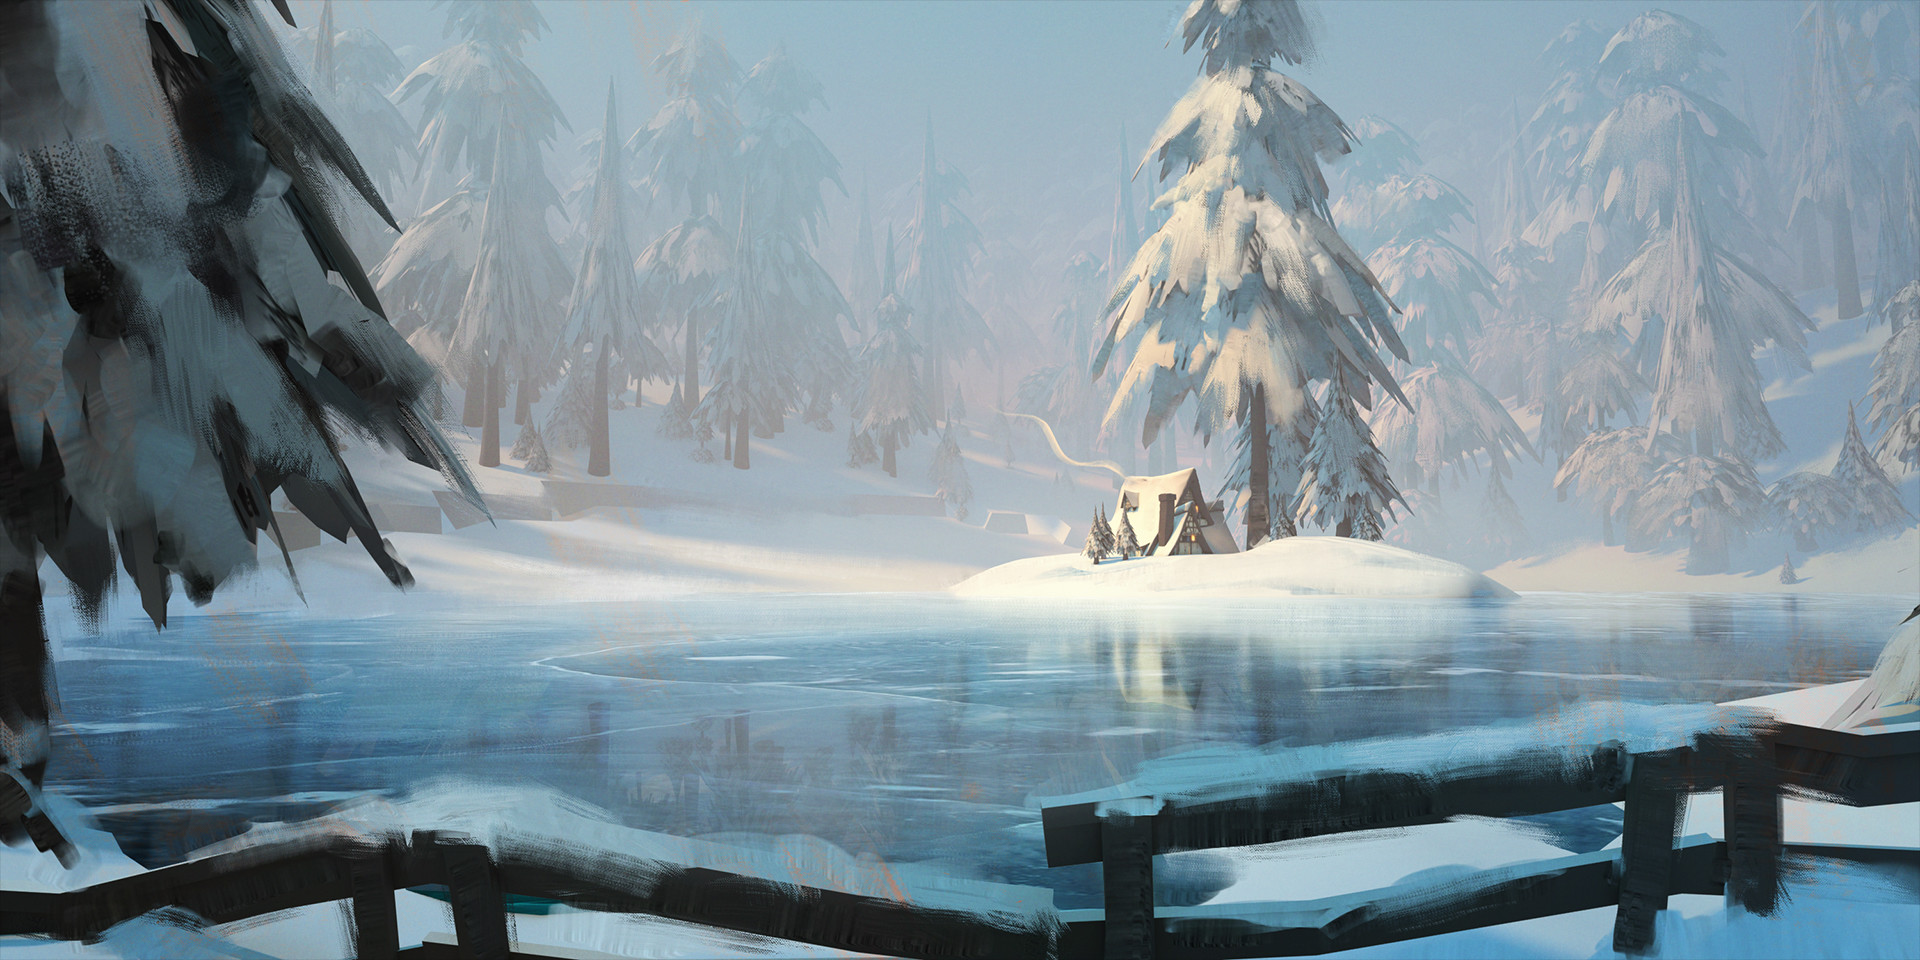 Digital Art Fantasy Art Thomas Stoop Winter Frozen Lake Snow Snowy Mountain Trees Cabin Lake 1920x960